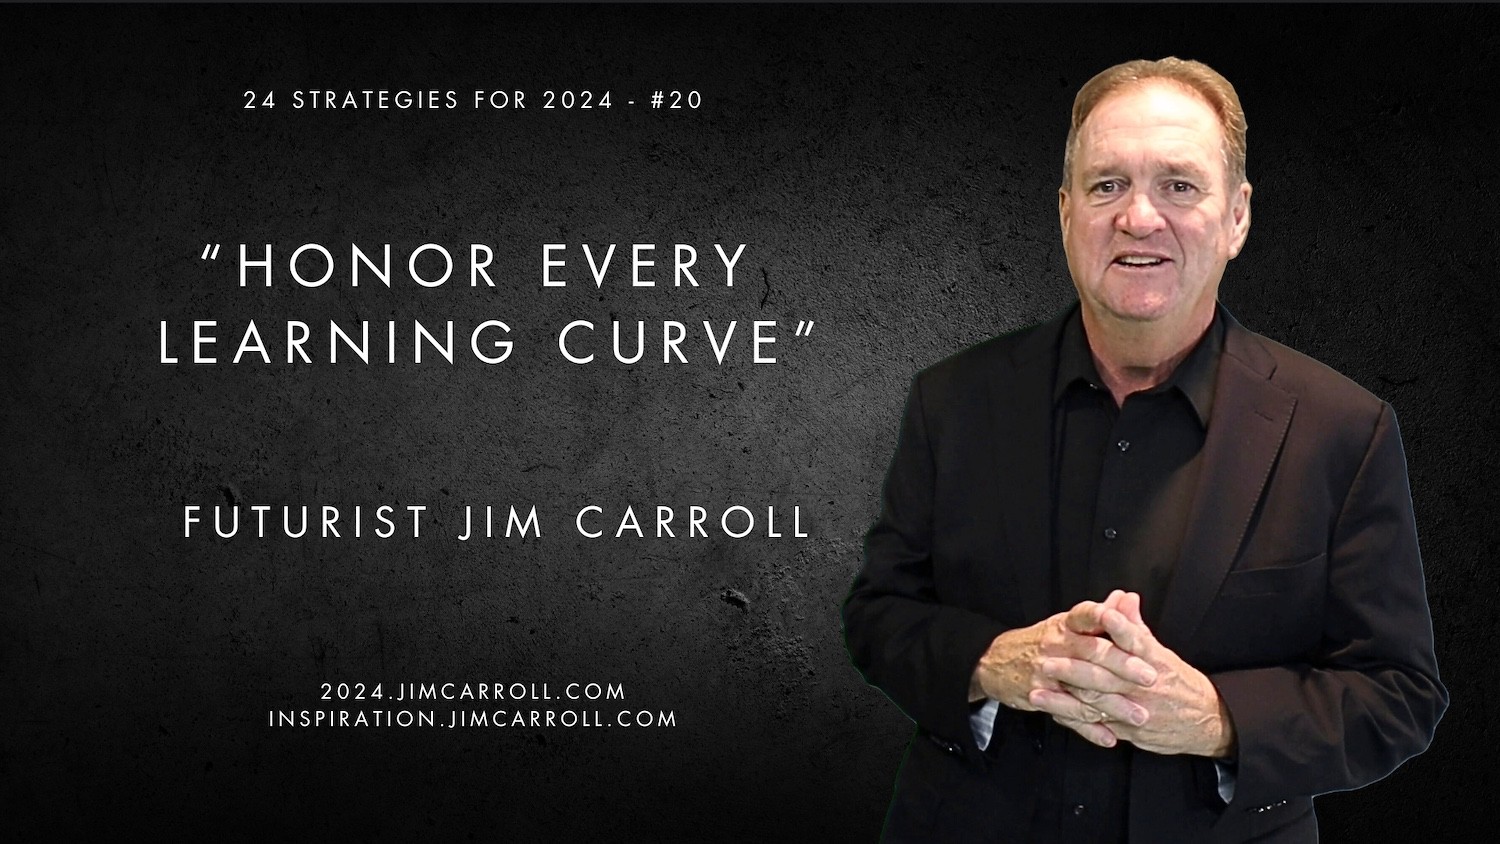 "Honor every learning curve" - Futurist Jim Carroll